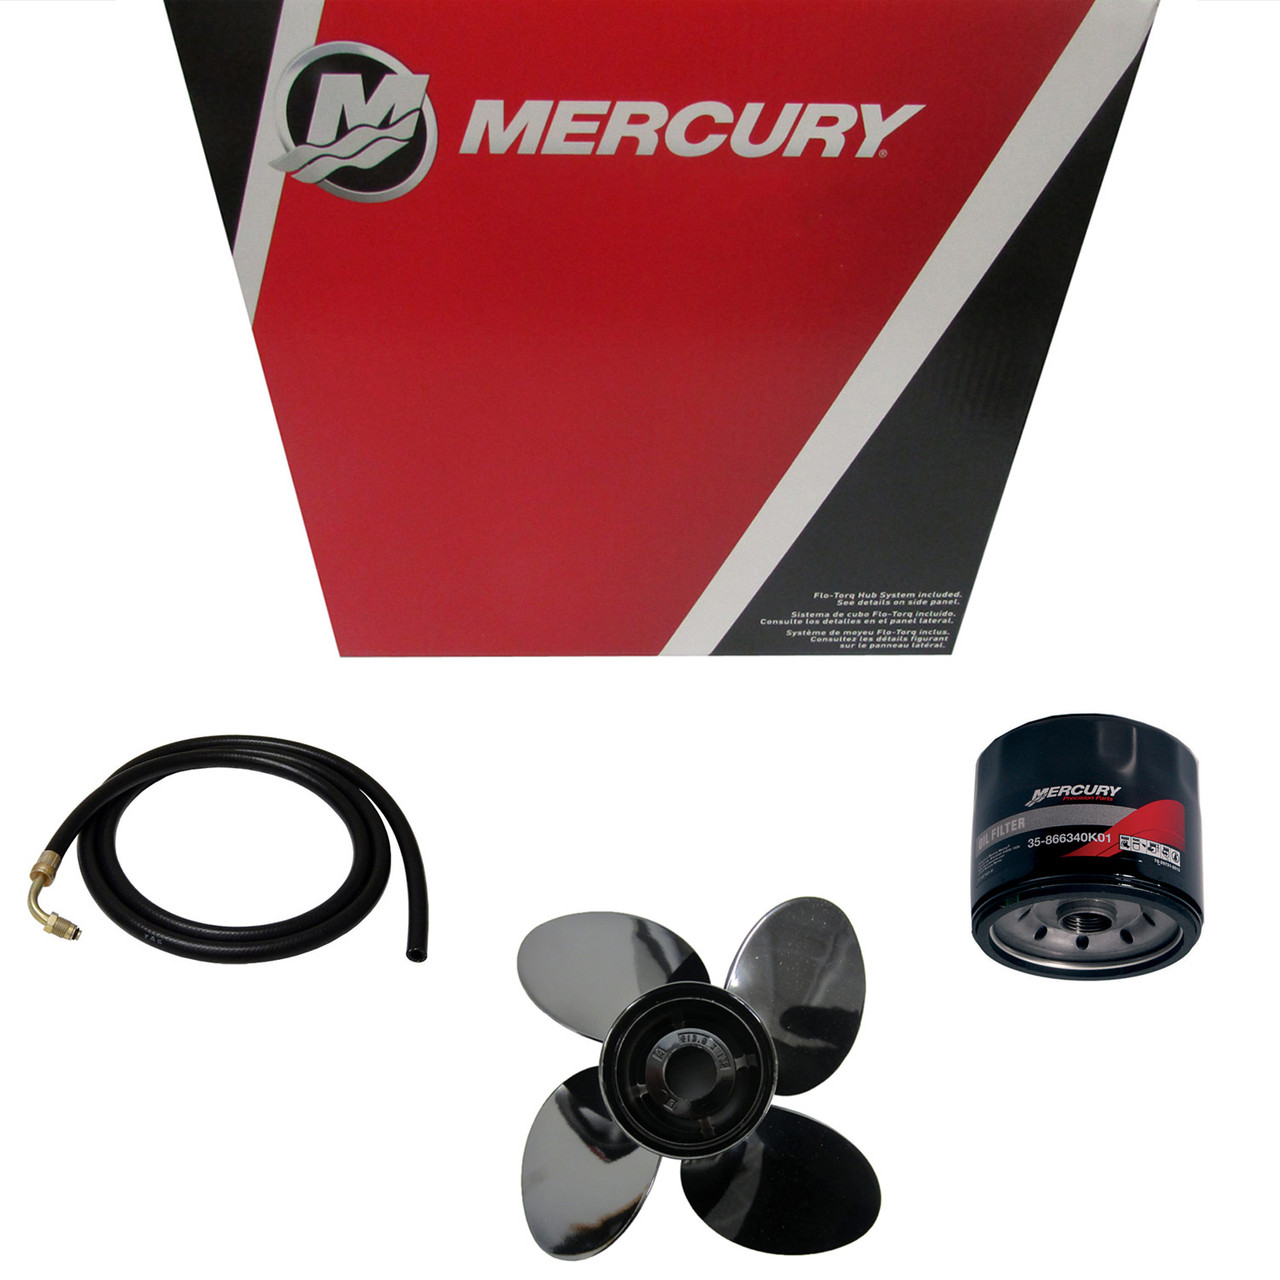 Mercury Marine / Mercruiser New OEM Fitting, 22-863389A01